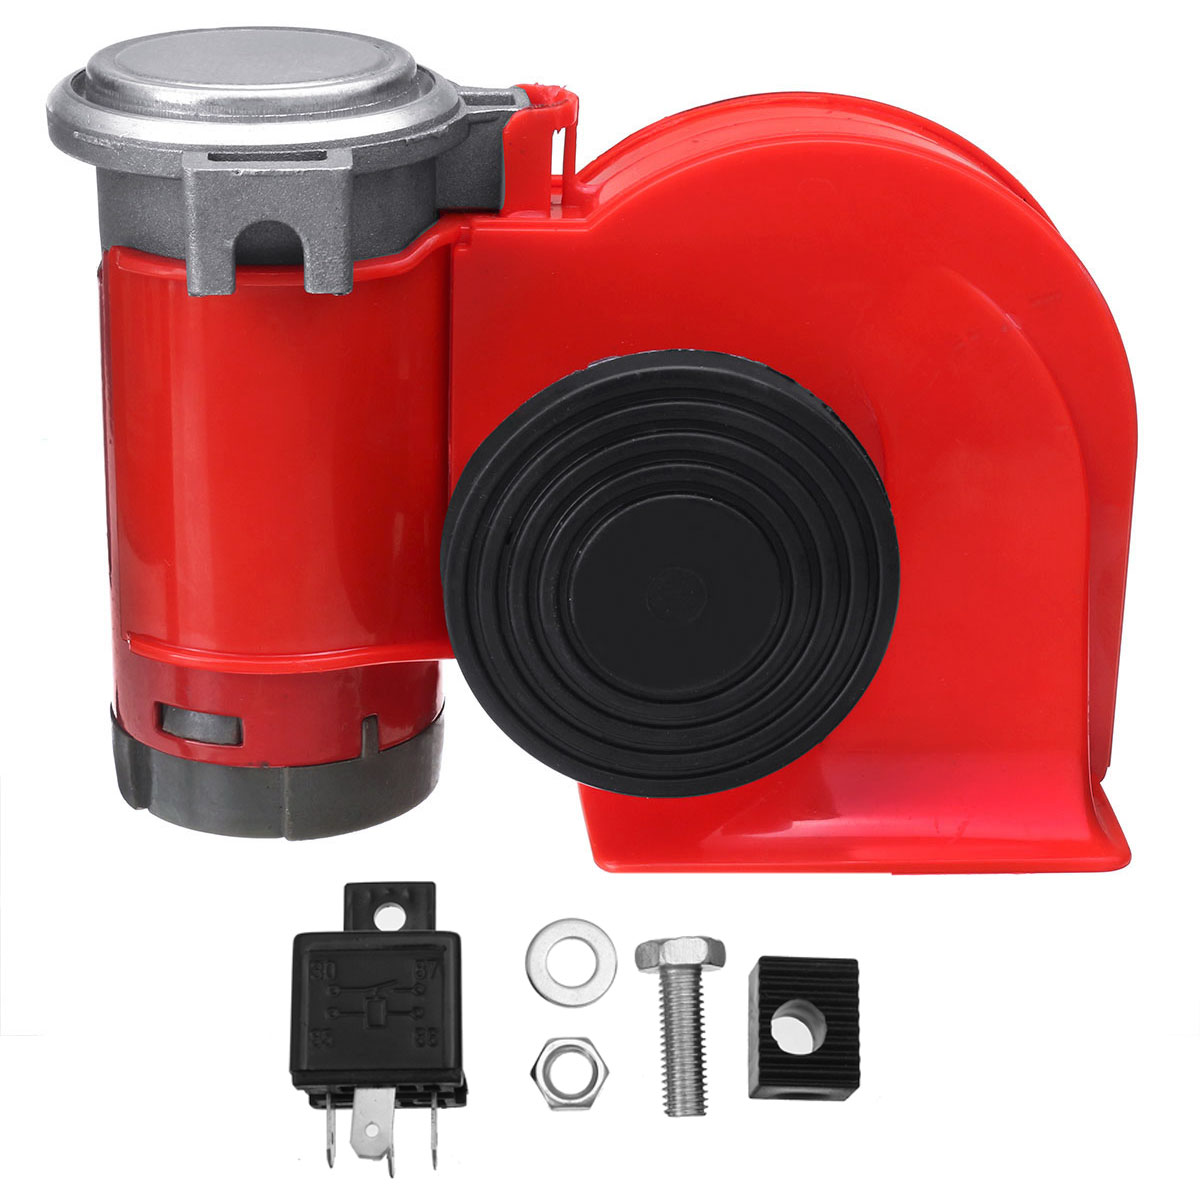 24V 300Db Red Dual Tone Elektropumpe Air Loud Horn Snail Compact für Auto LKW Motorrad